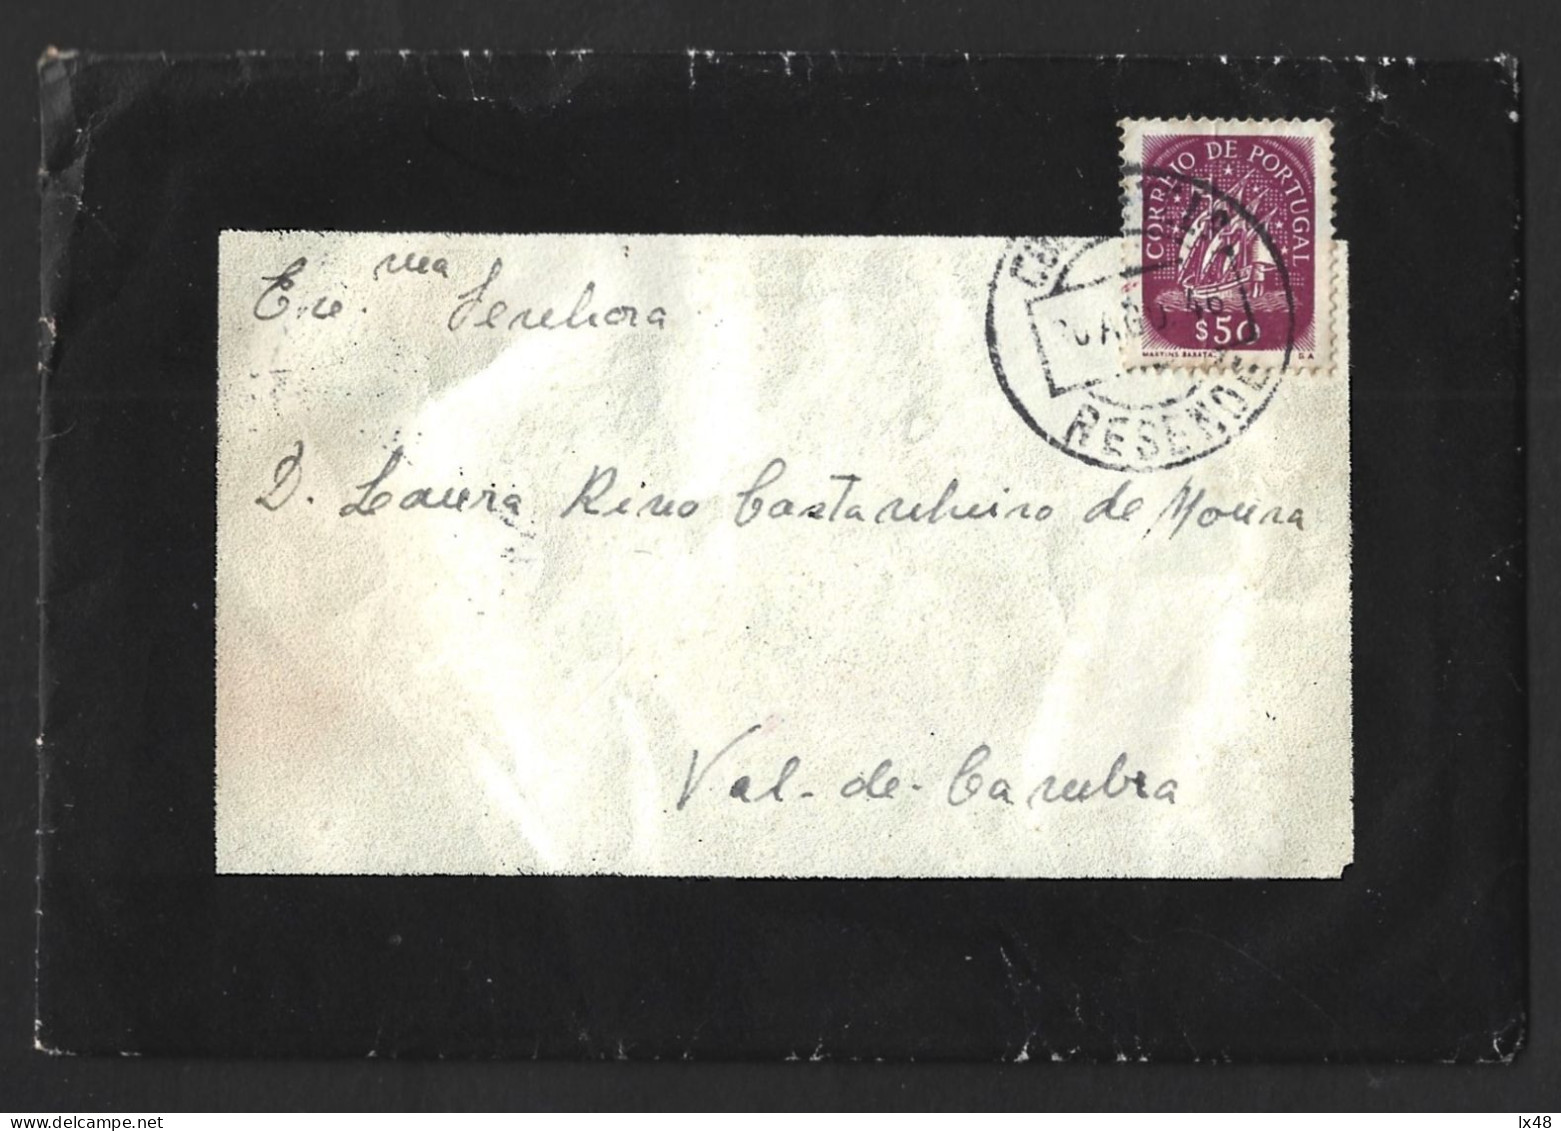 Carta De Luto Circulada De Resende Em 1946. Stamp Caravela.  Mourning Letter Circulated From Resende In 1946. Stamp Cara - Storia Postale